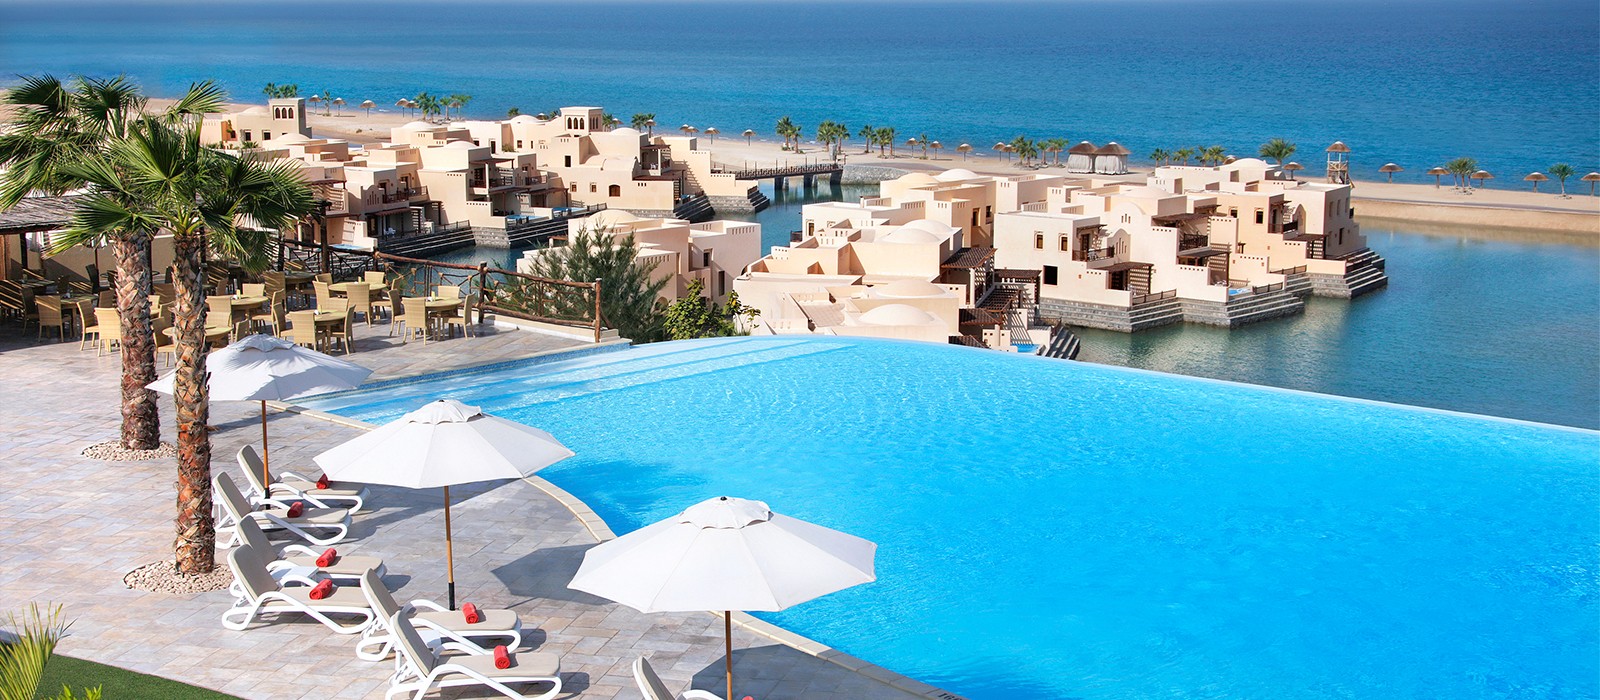 header - the Cove Rotana - Luxury Ras Al Khaimah holiday packages